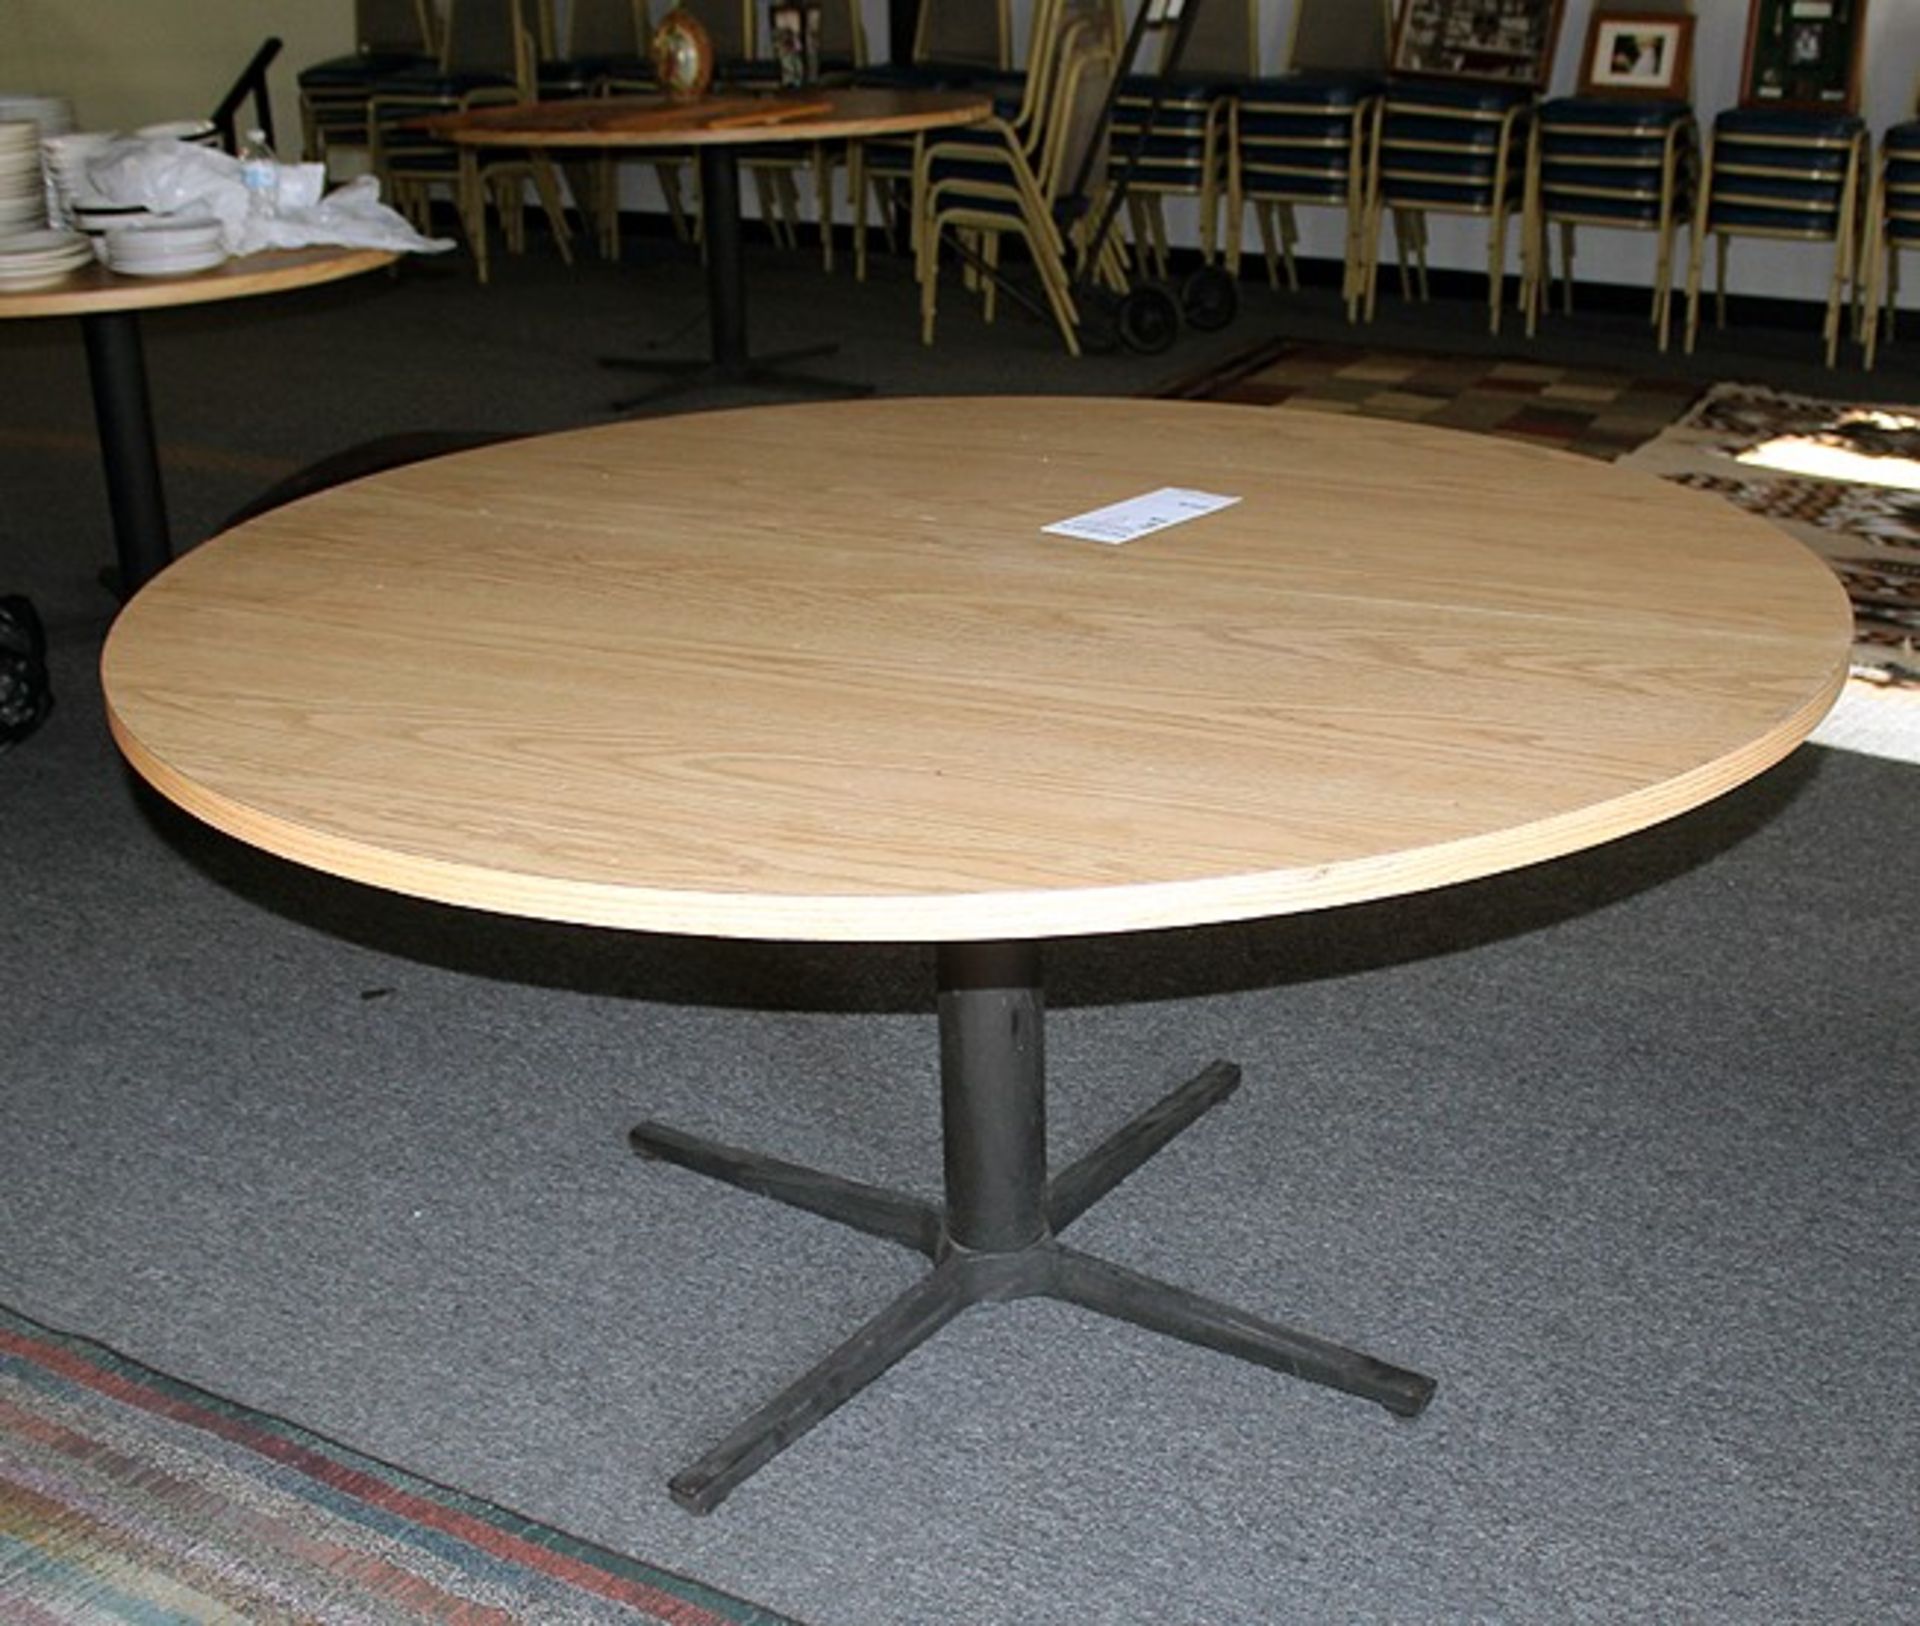 60" Oak Formica Top Pedestal Round Table